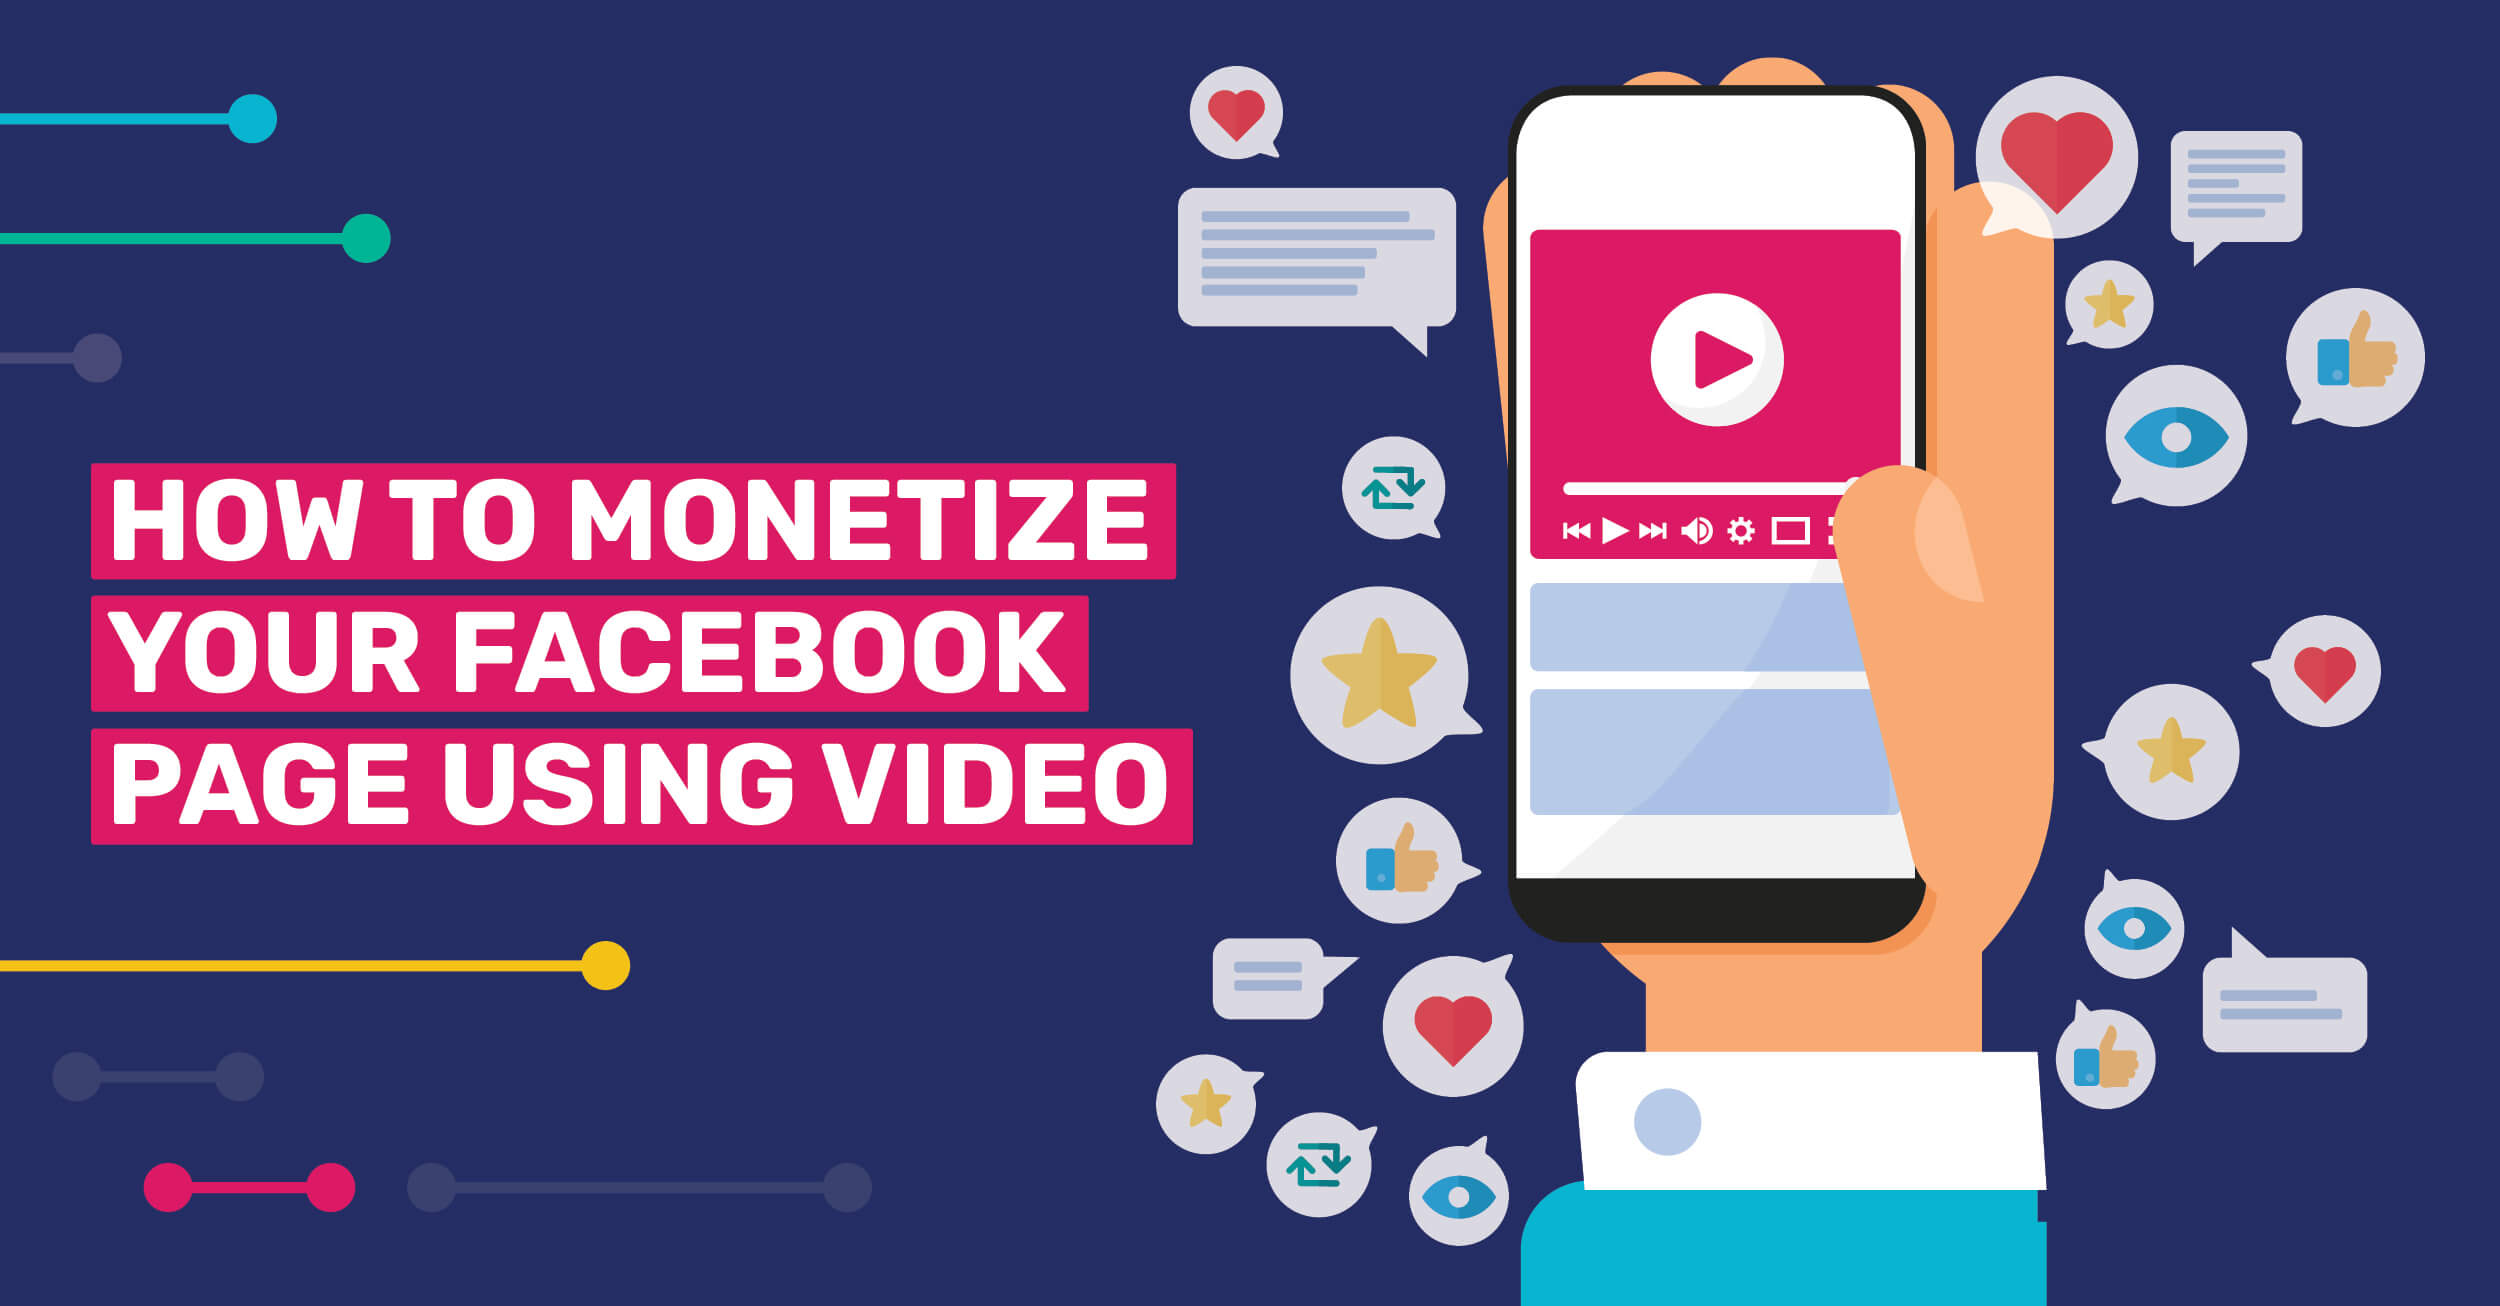 How to monetize facebook videos in Nigeria